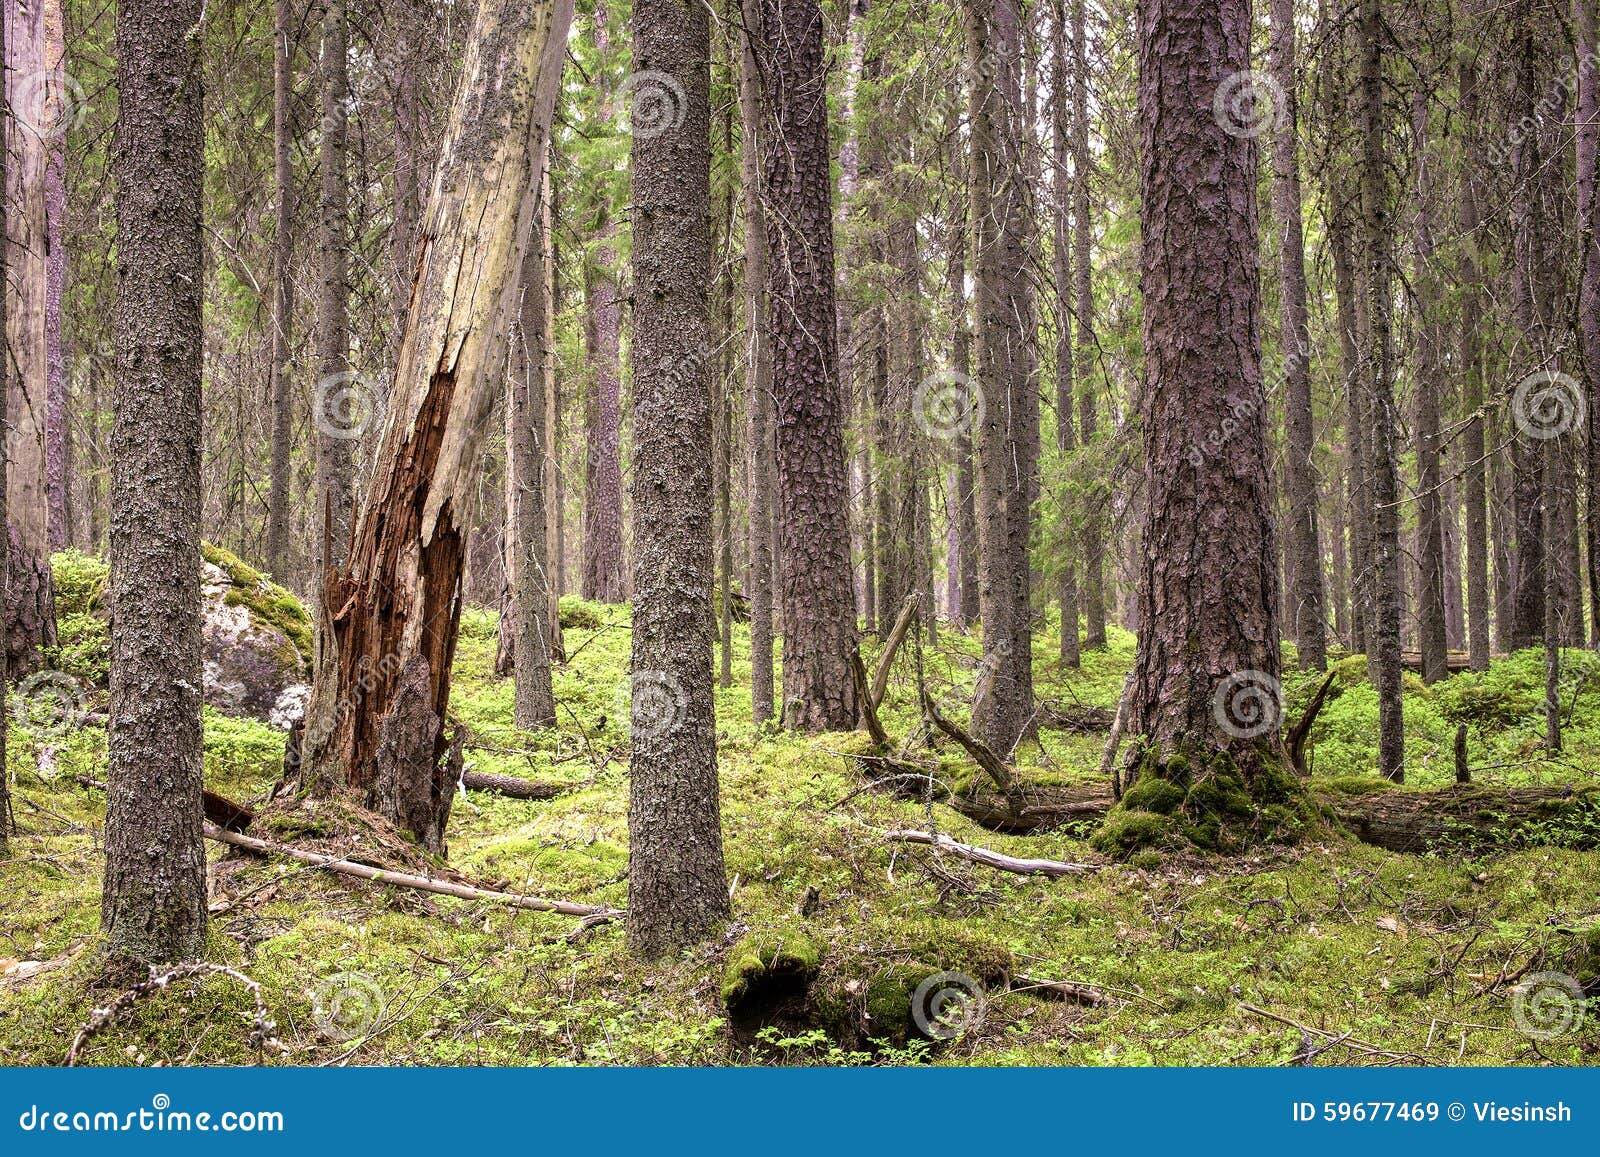 pristine boreal forest of conifers